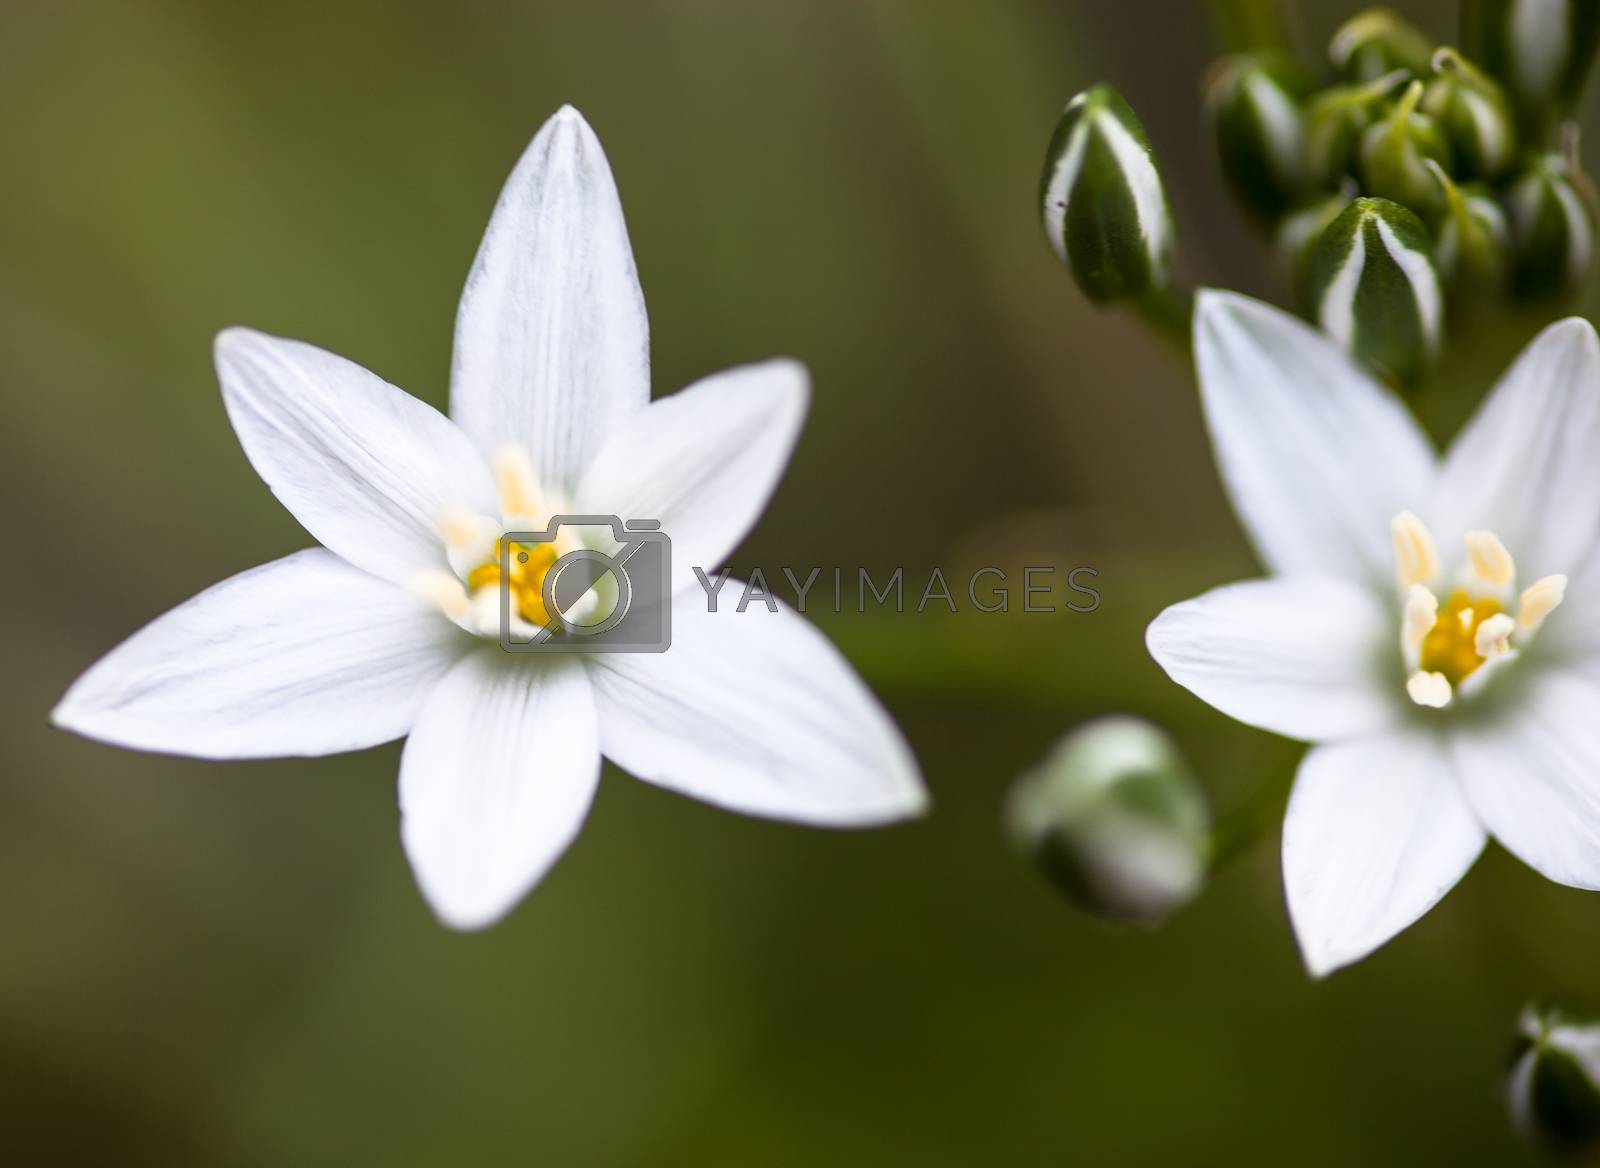 Royalty free image of White flowers of Ornithogalum umbellatum by rootstocks